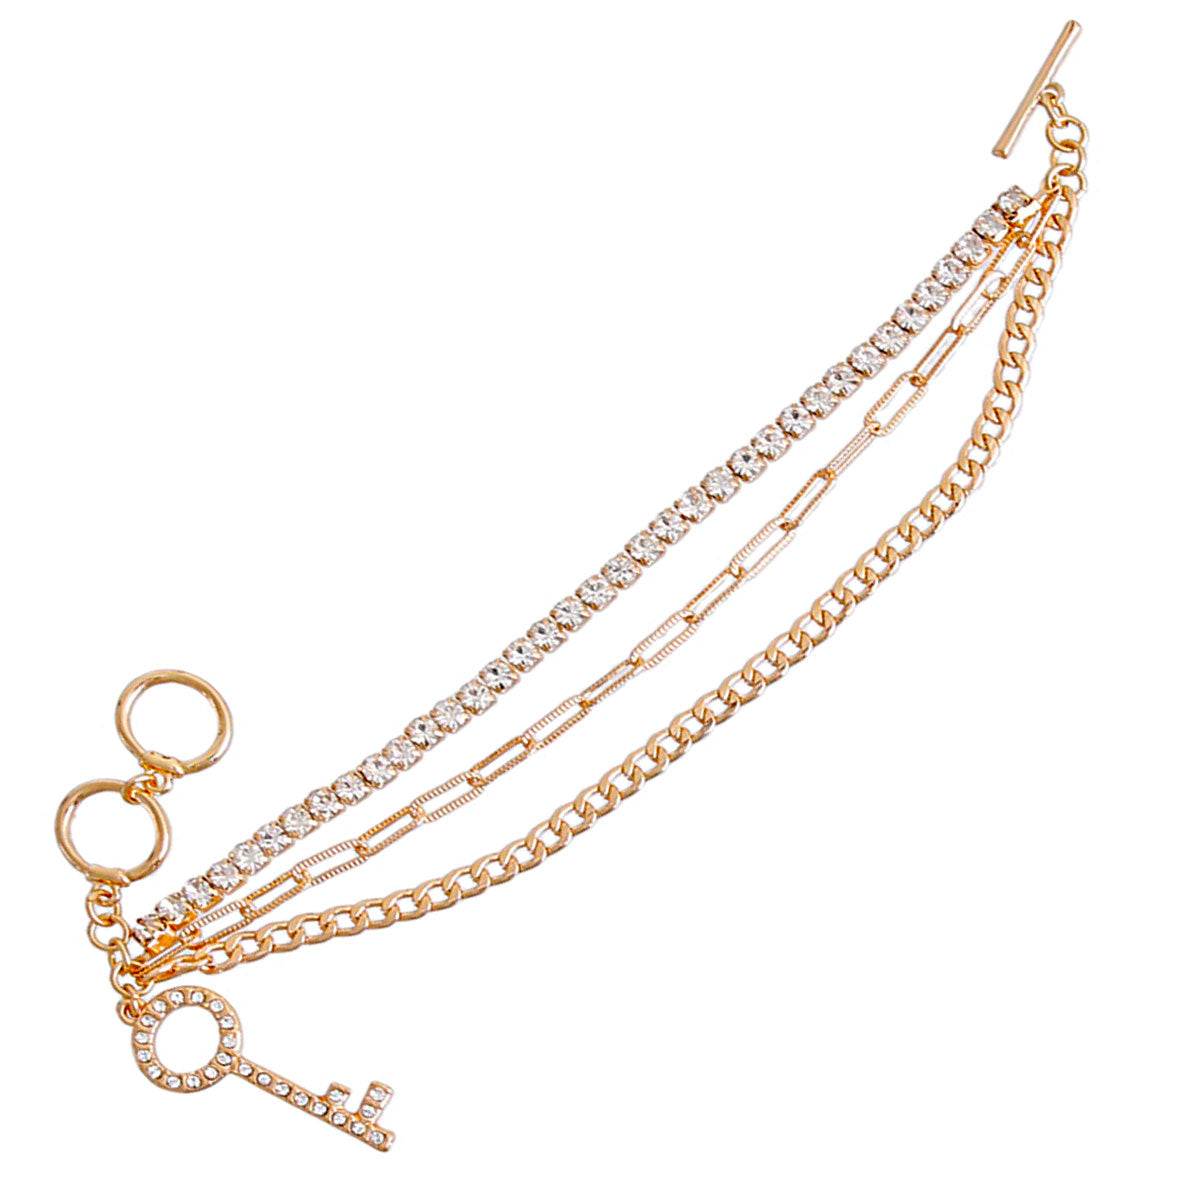 Gold Layered Chain Key Bracelet